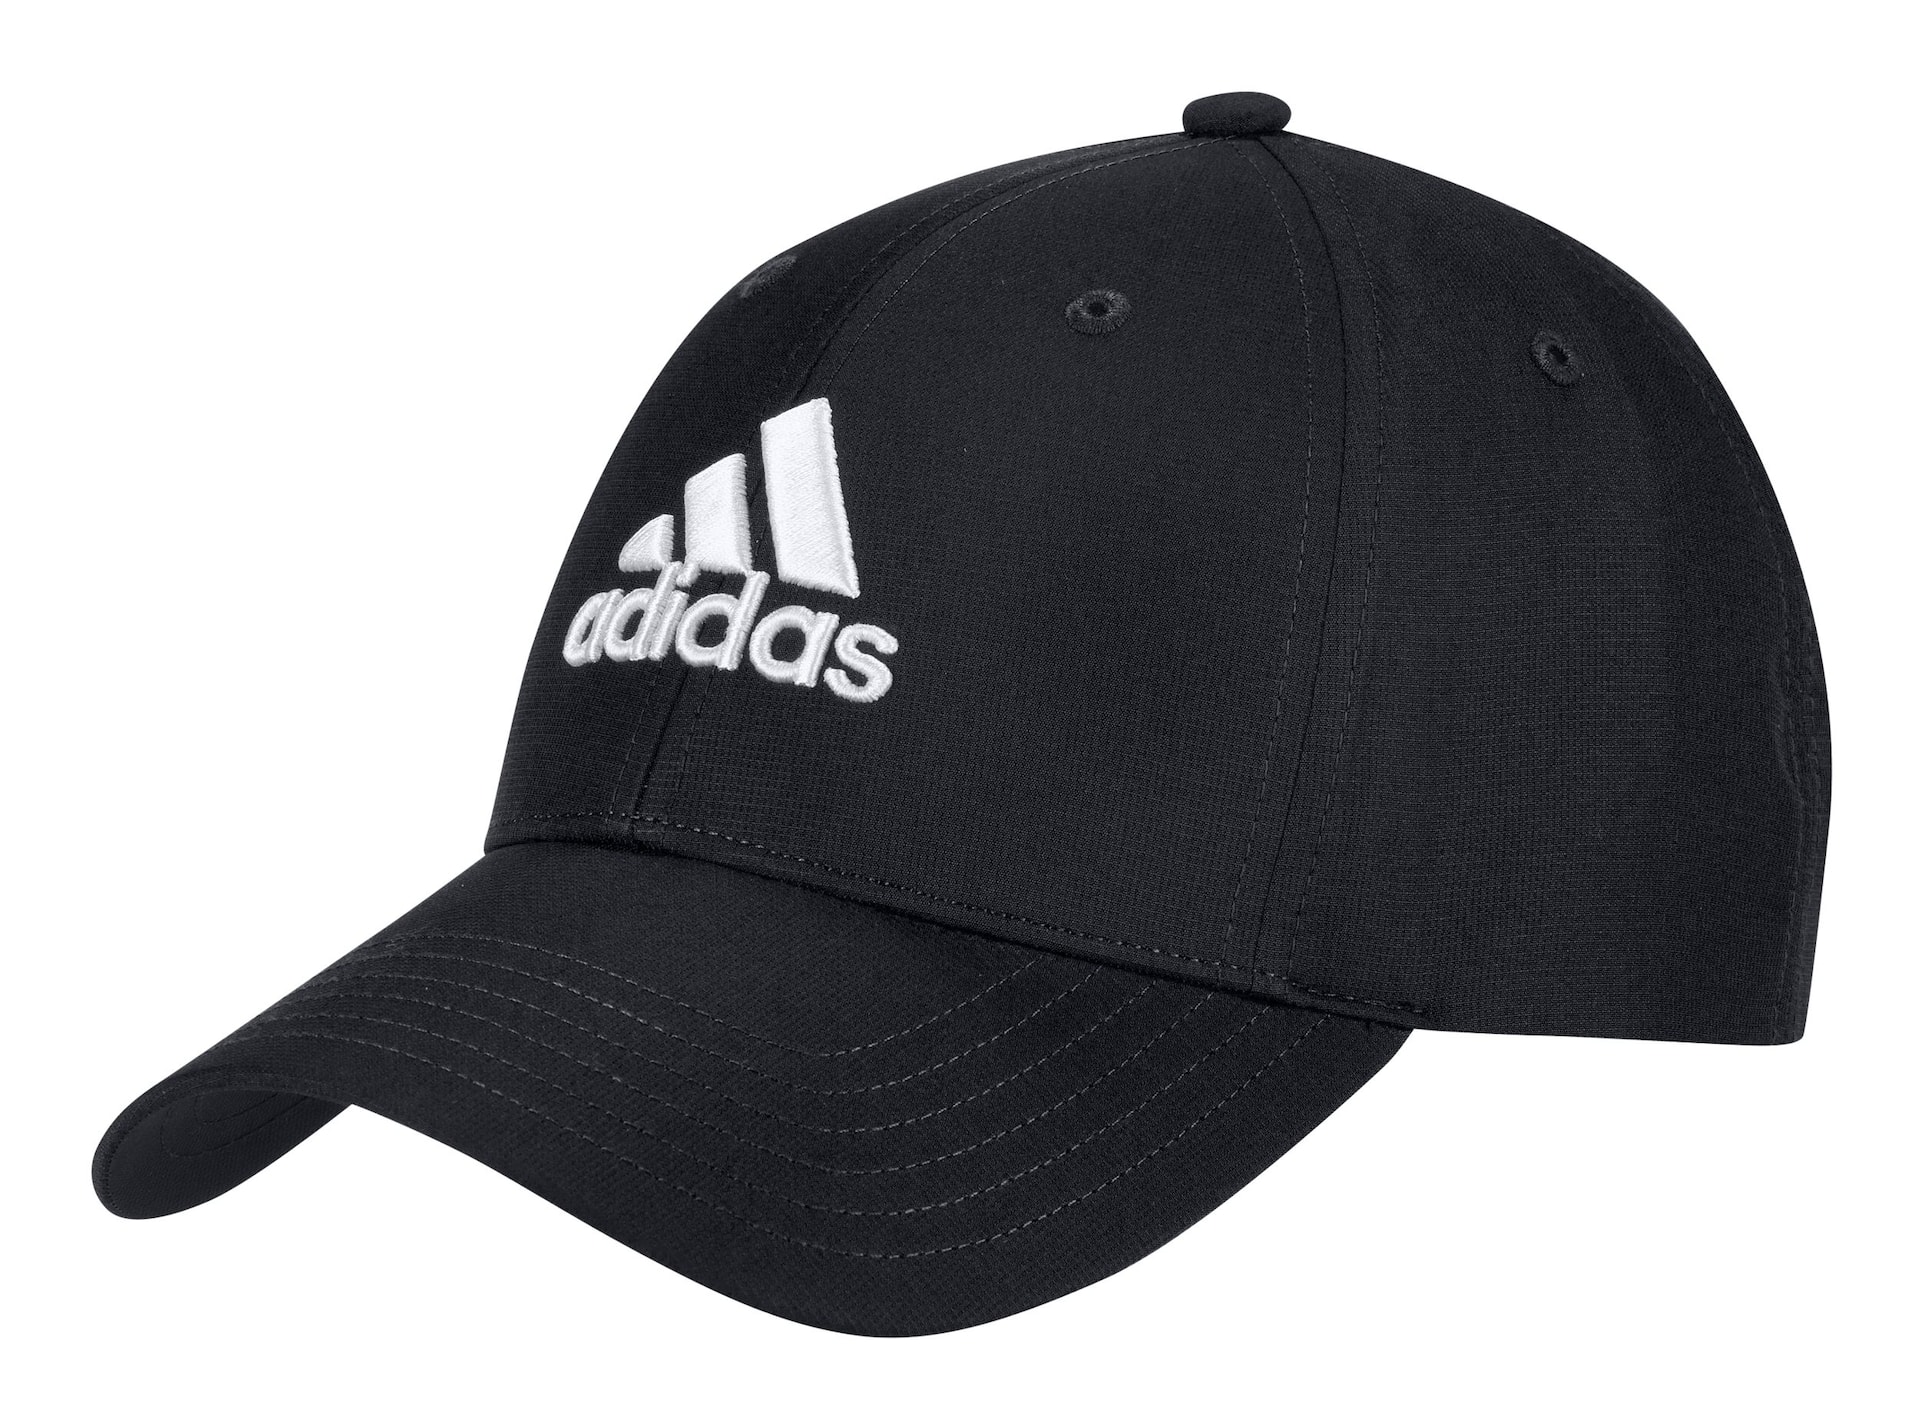 adidas Unisex Golf Performance Hat, One Size, Black